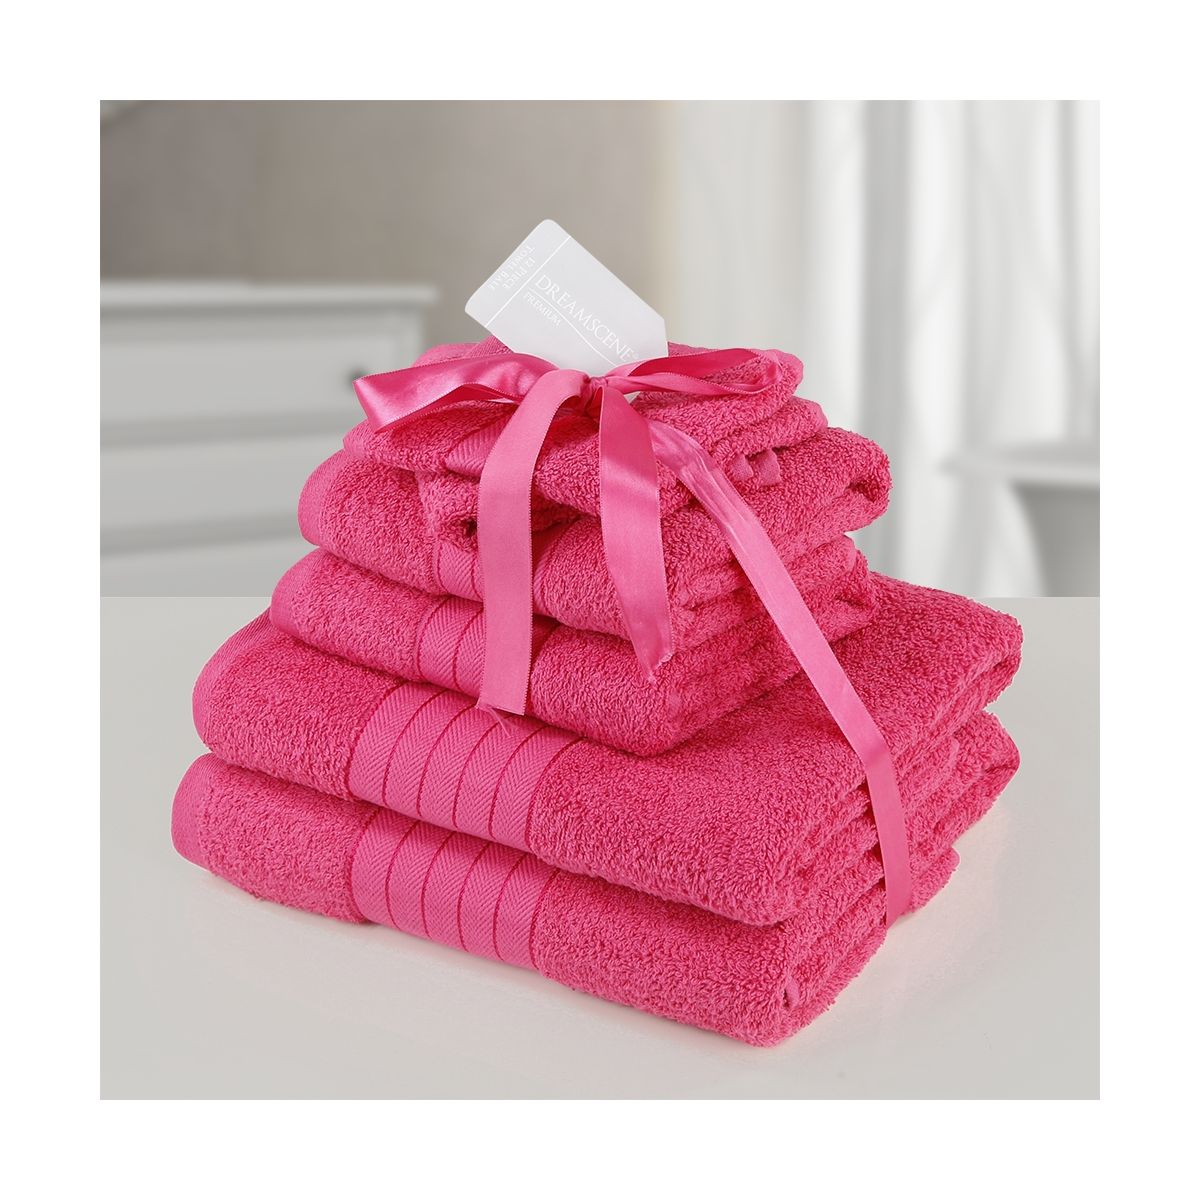 Dreamscene Towel Bale 6 Piece - Hot Pink